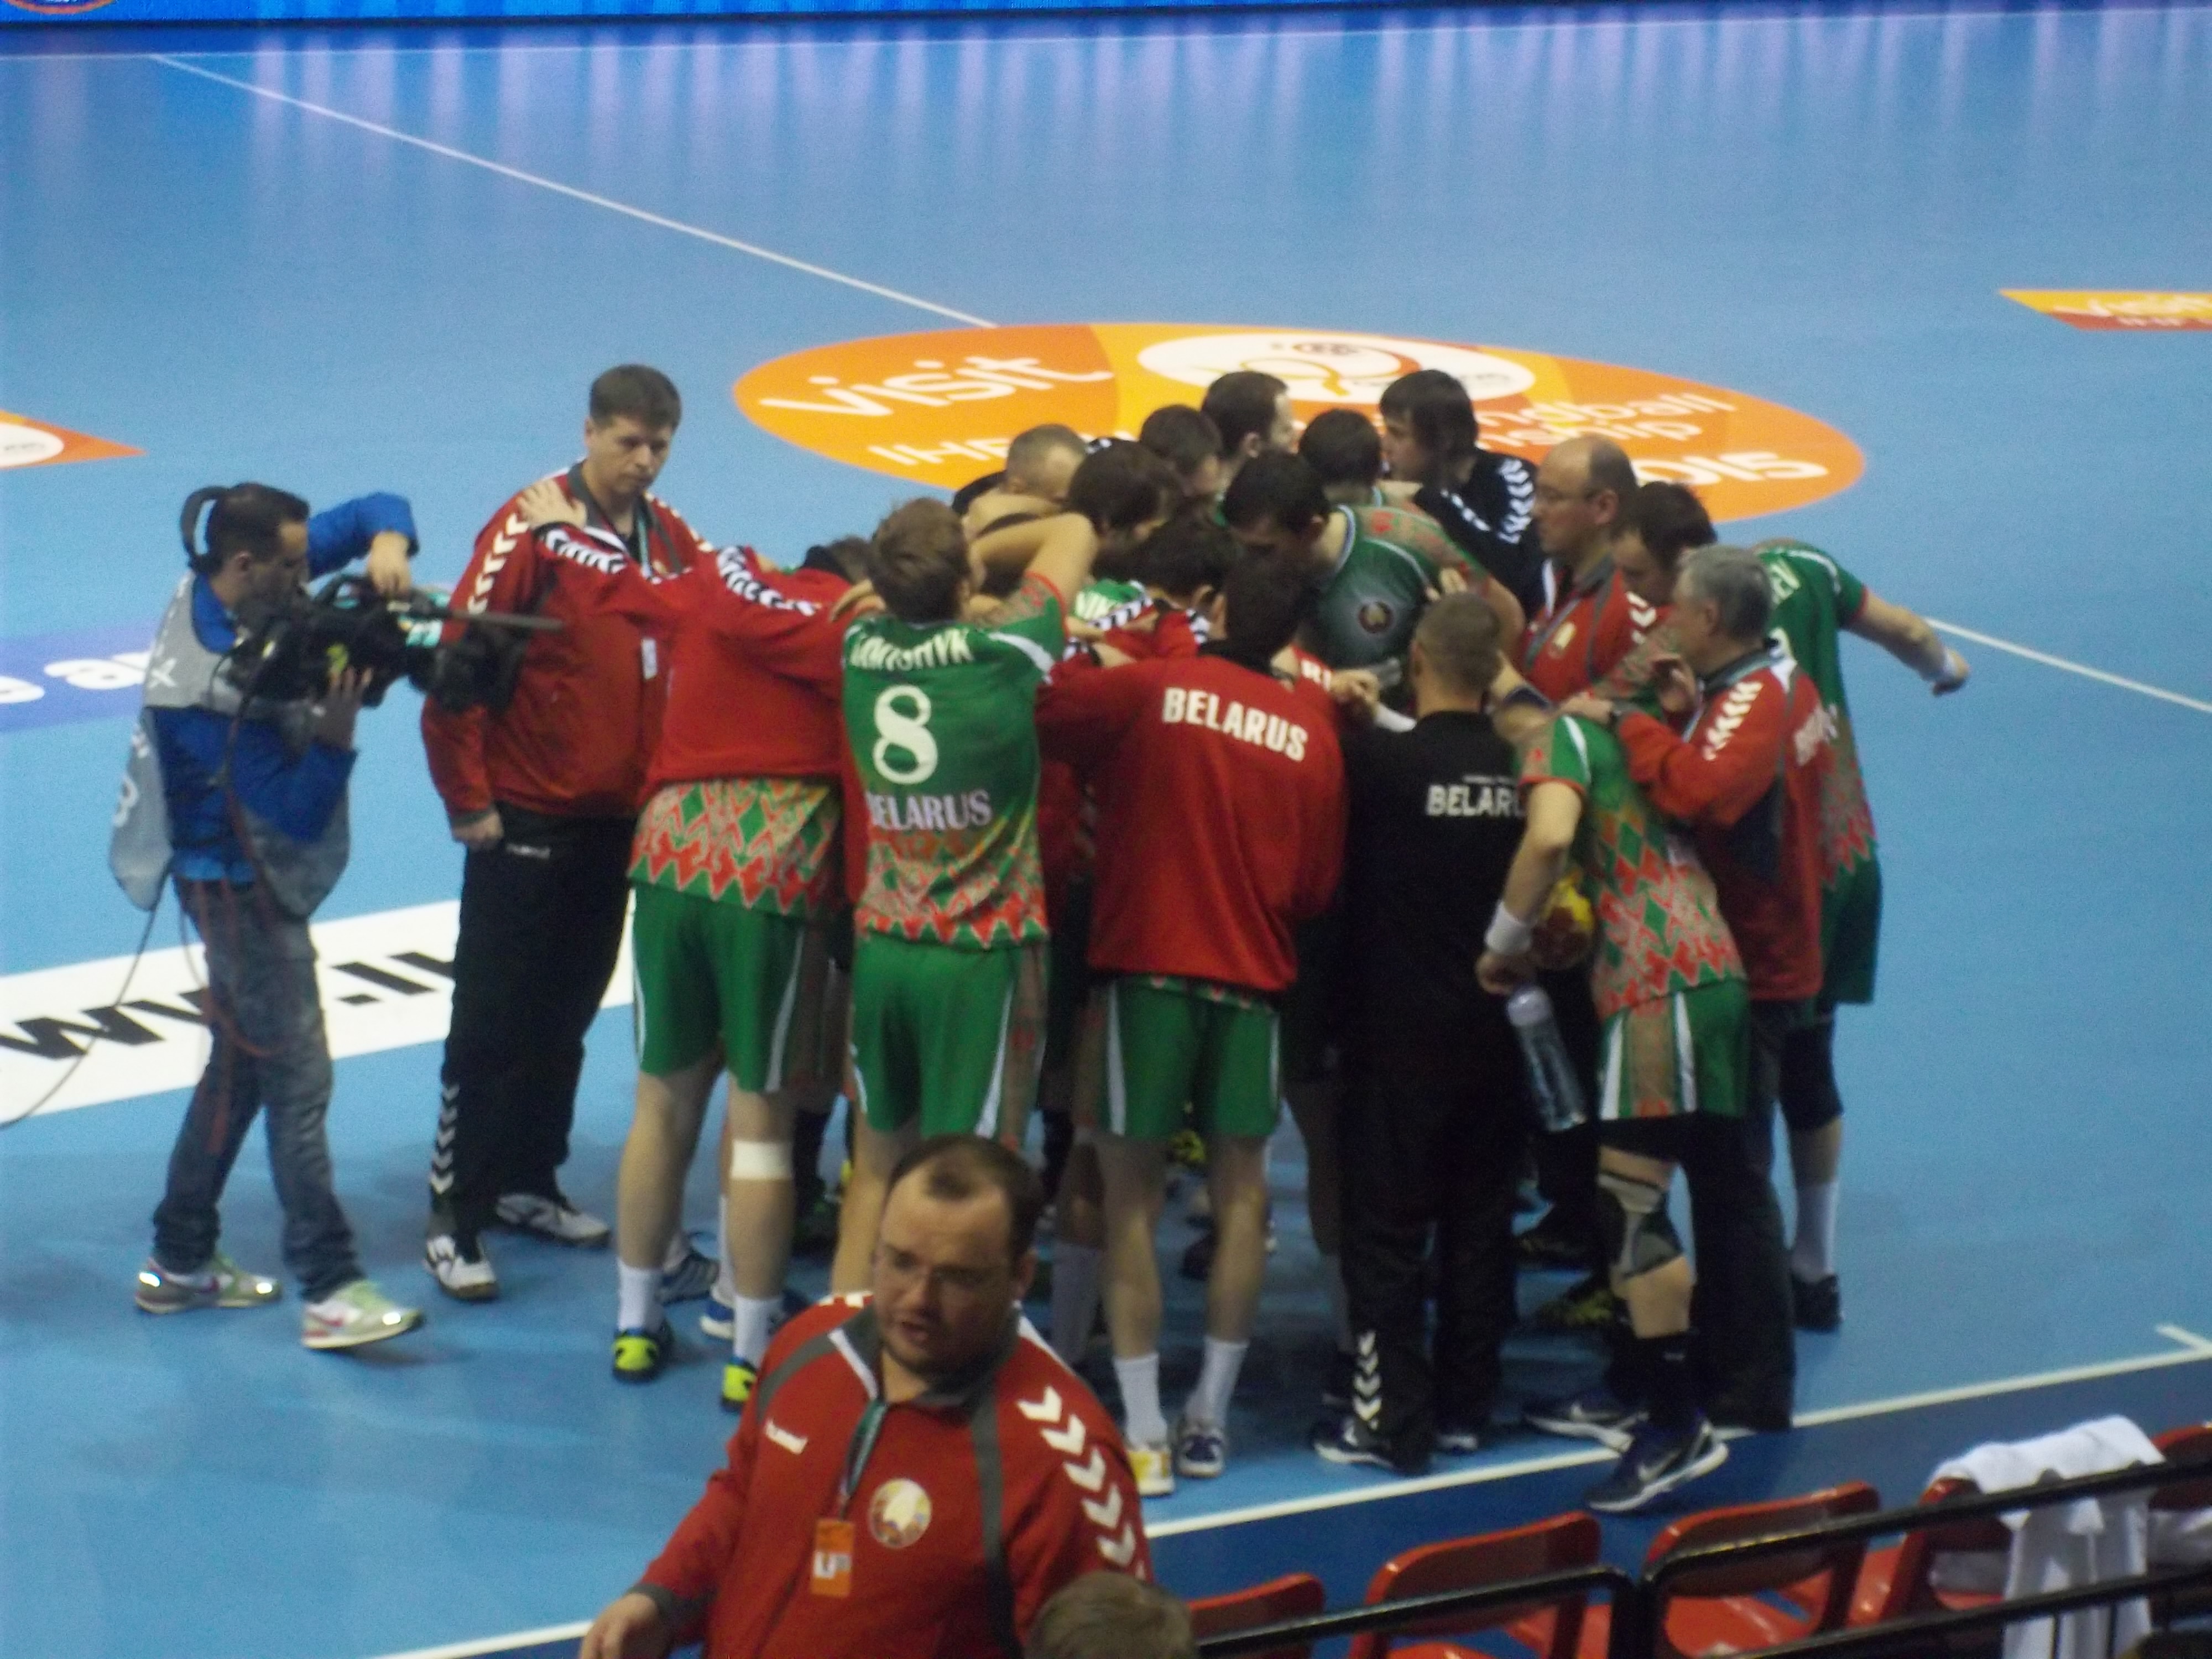 The men's handball team from Belarus huddles before their game against Saudi Arabia.